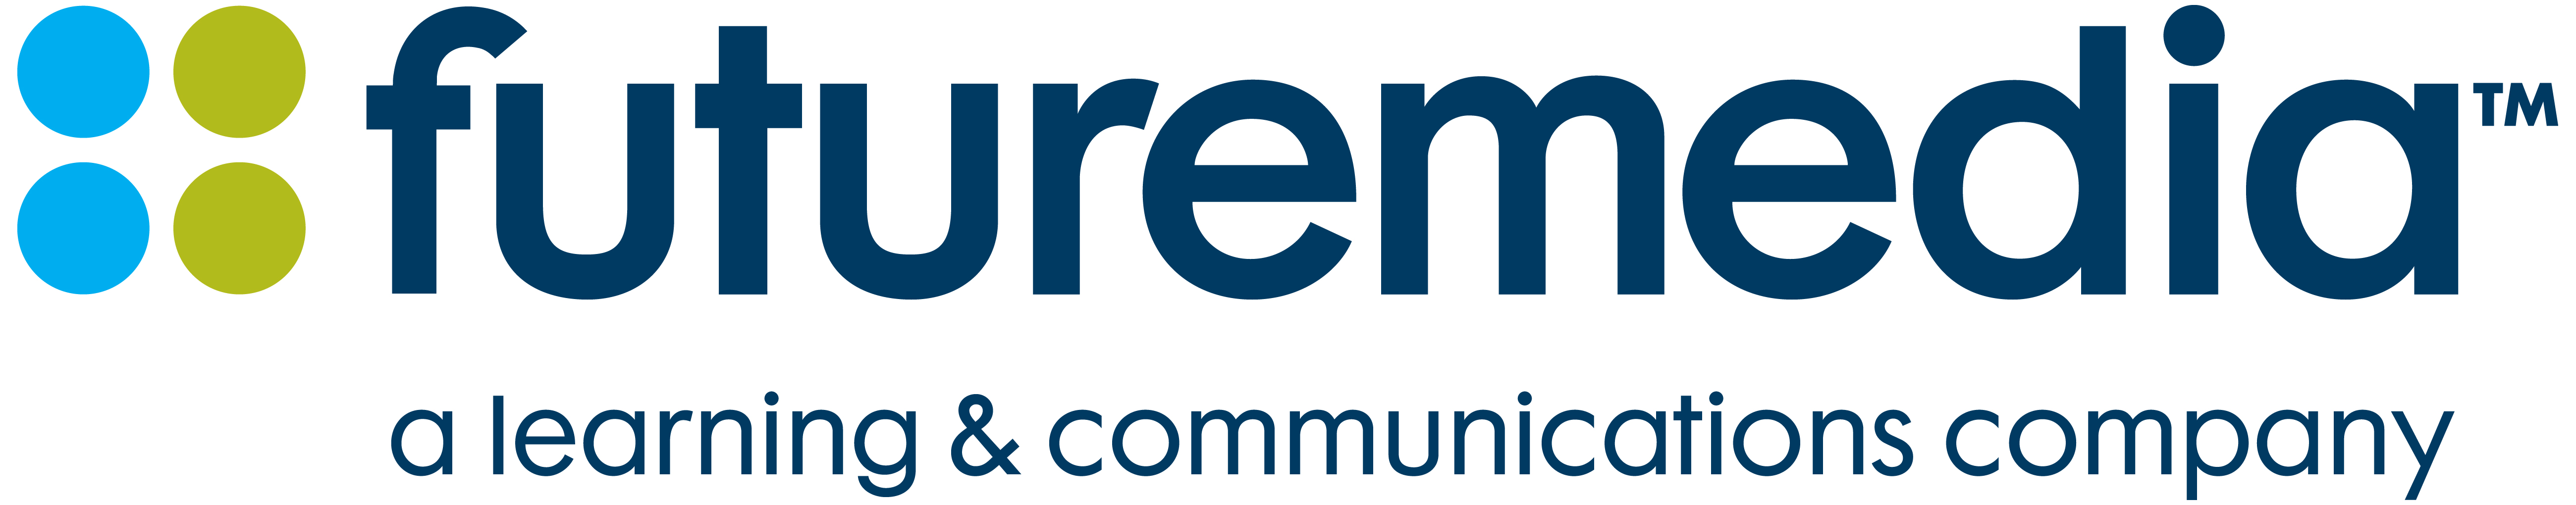 Futuremedia Logo